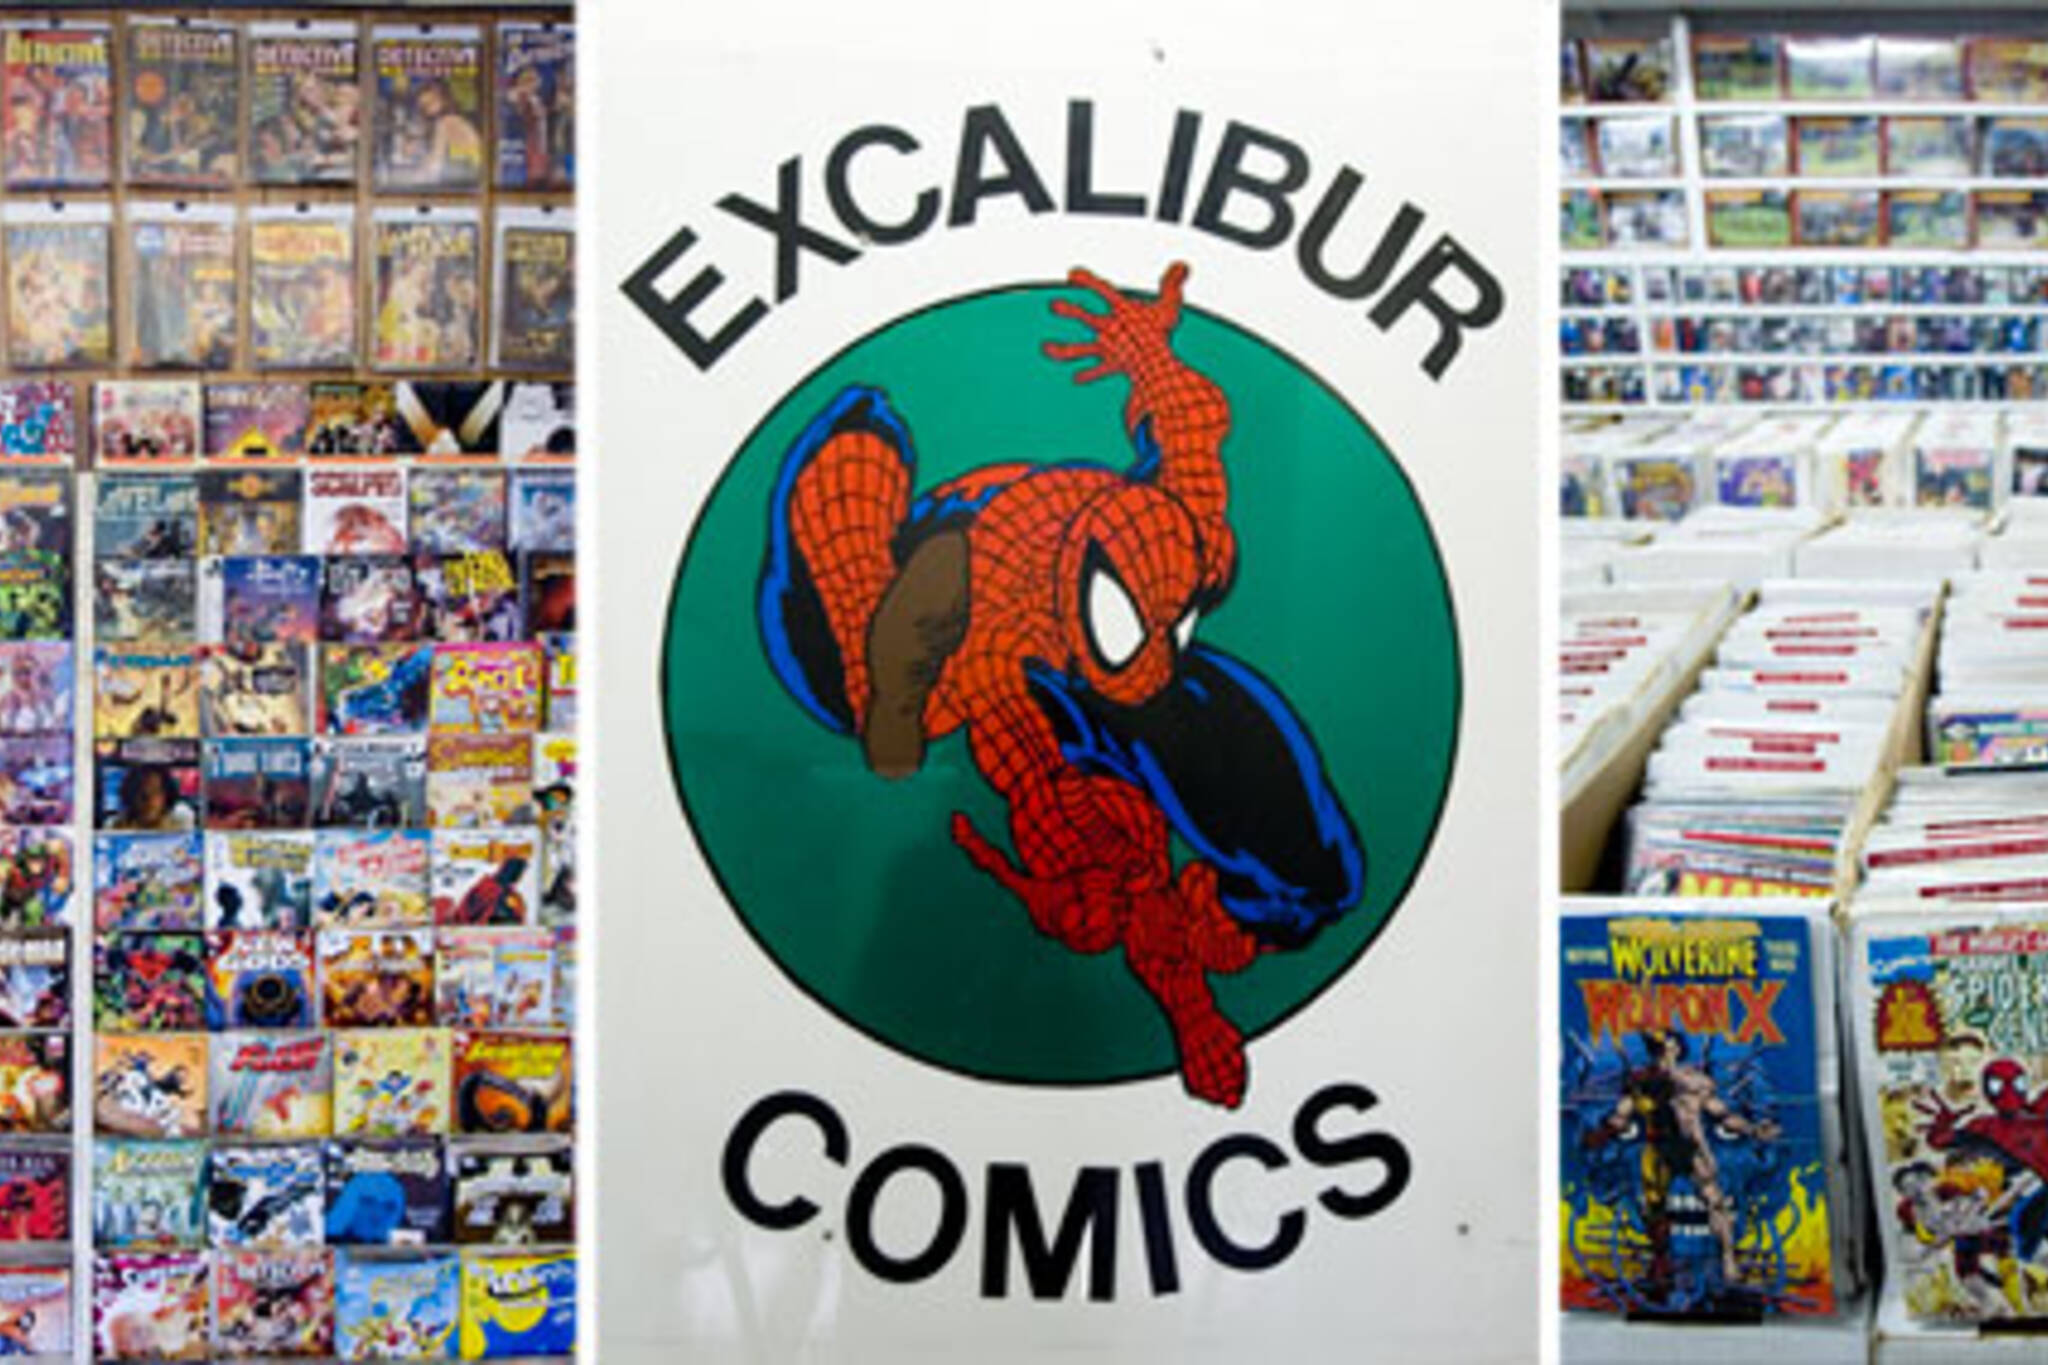 Excalibur Comics Toronto